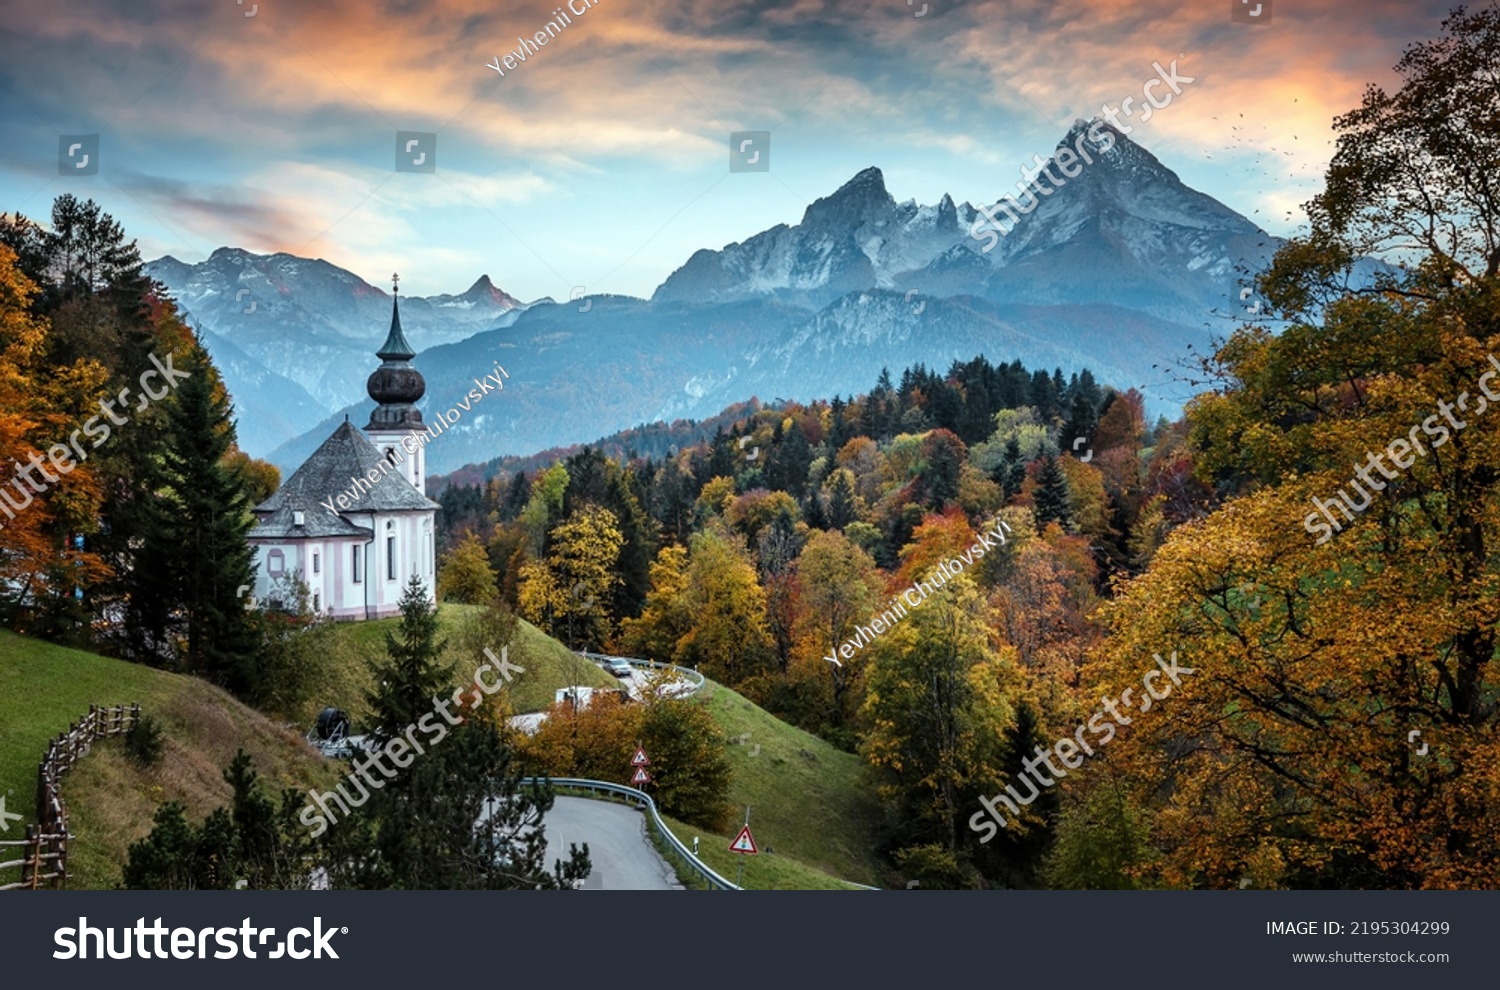 Beautiful nature landscape. Incredible autumn scenery. View on Alpine highlands with Watzmann mountduring sunset. Famous Maria Gern Church. Berchtesgaden Bavaria Alps Germany #2195304299